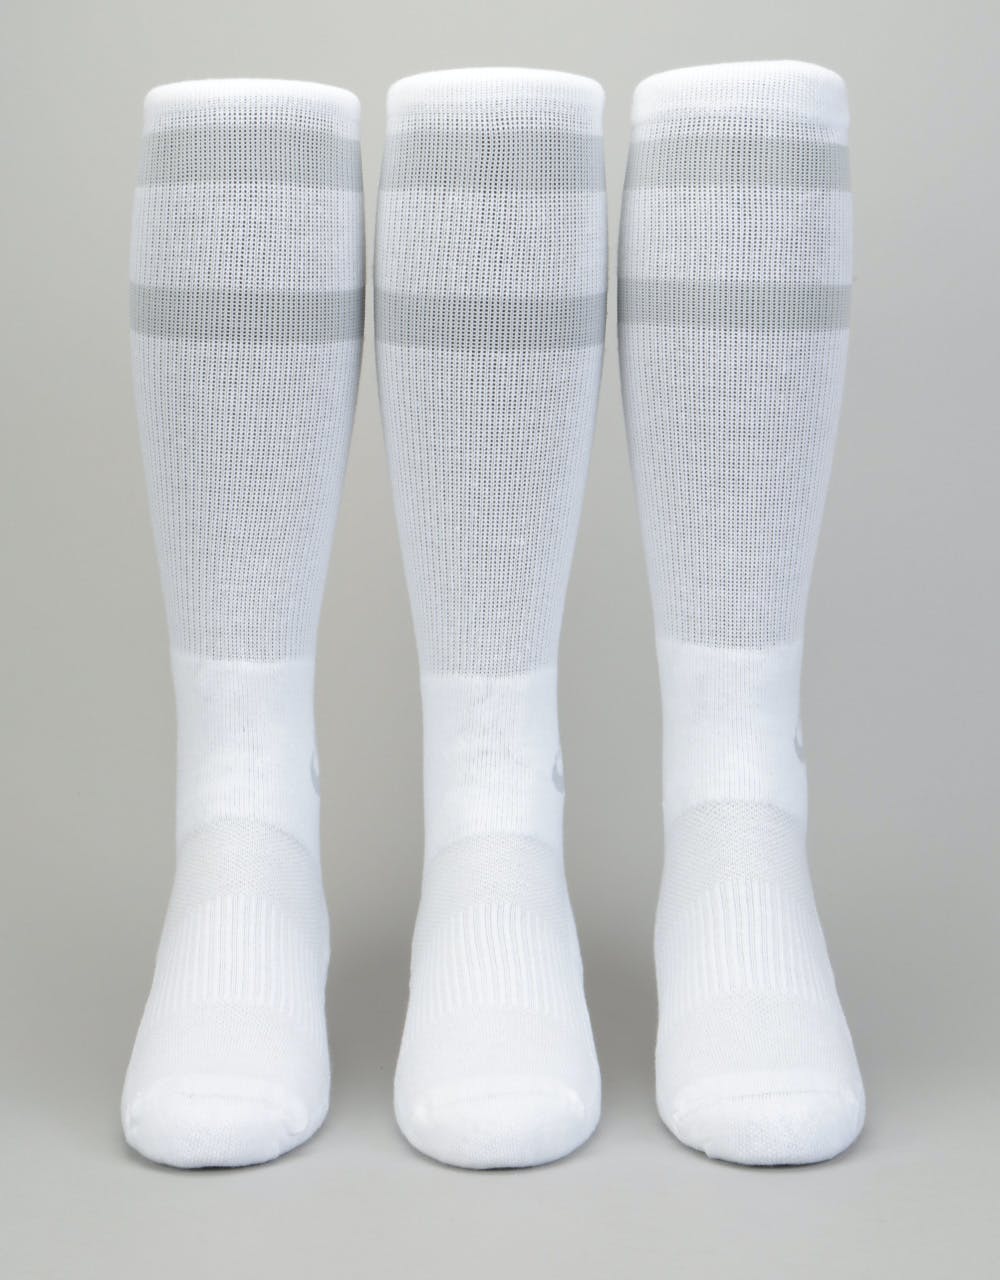 Nike SB Crew Socks 3 Pack - White/Wolf Grey